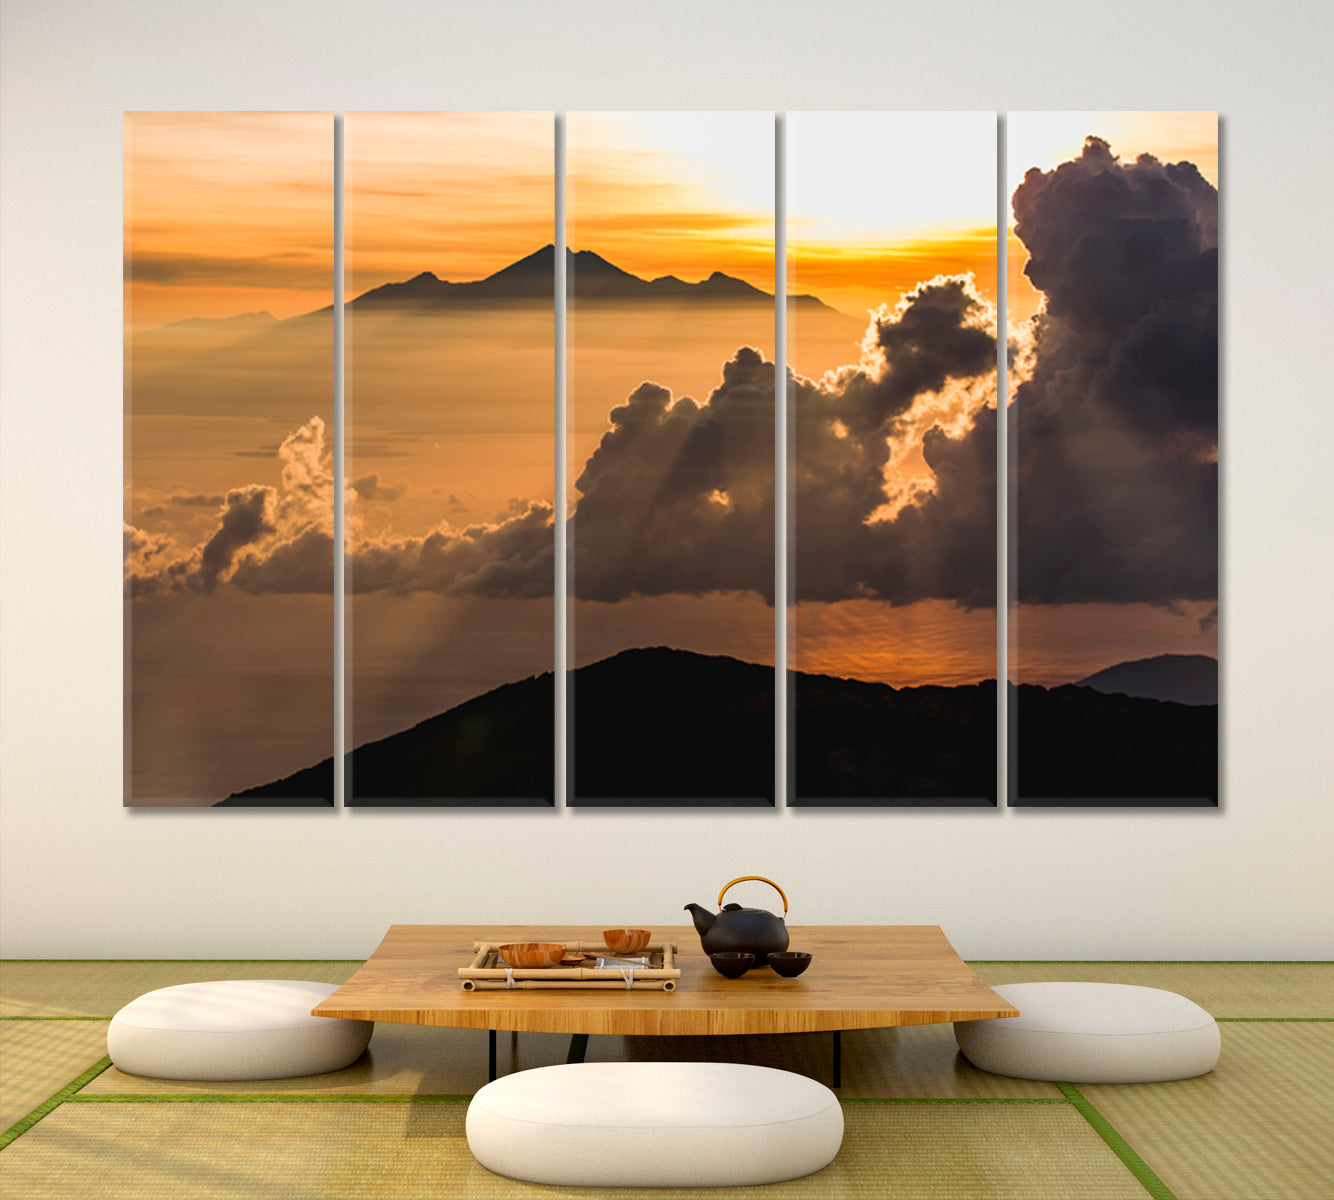 Mount Agung Volcano Rinjani Peak Sunrays Colorful Sky Panoramic Landscape Scenery Landscape Fine Art Print Artesty 5 panels 36" x 24" 